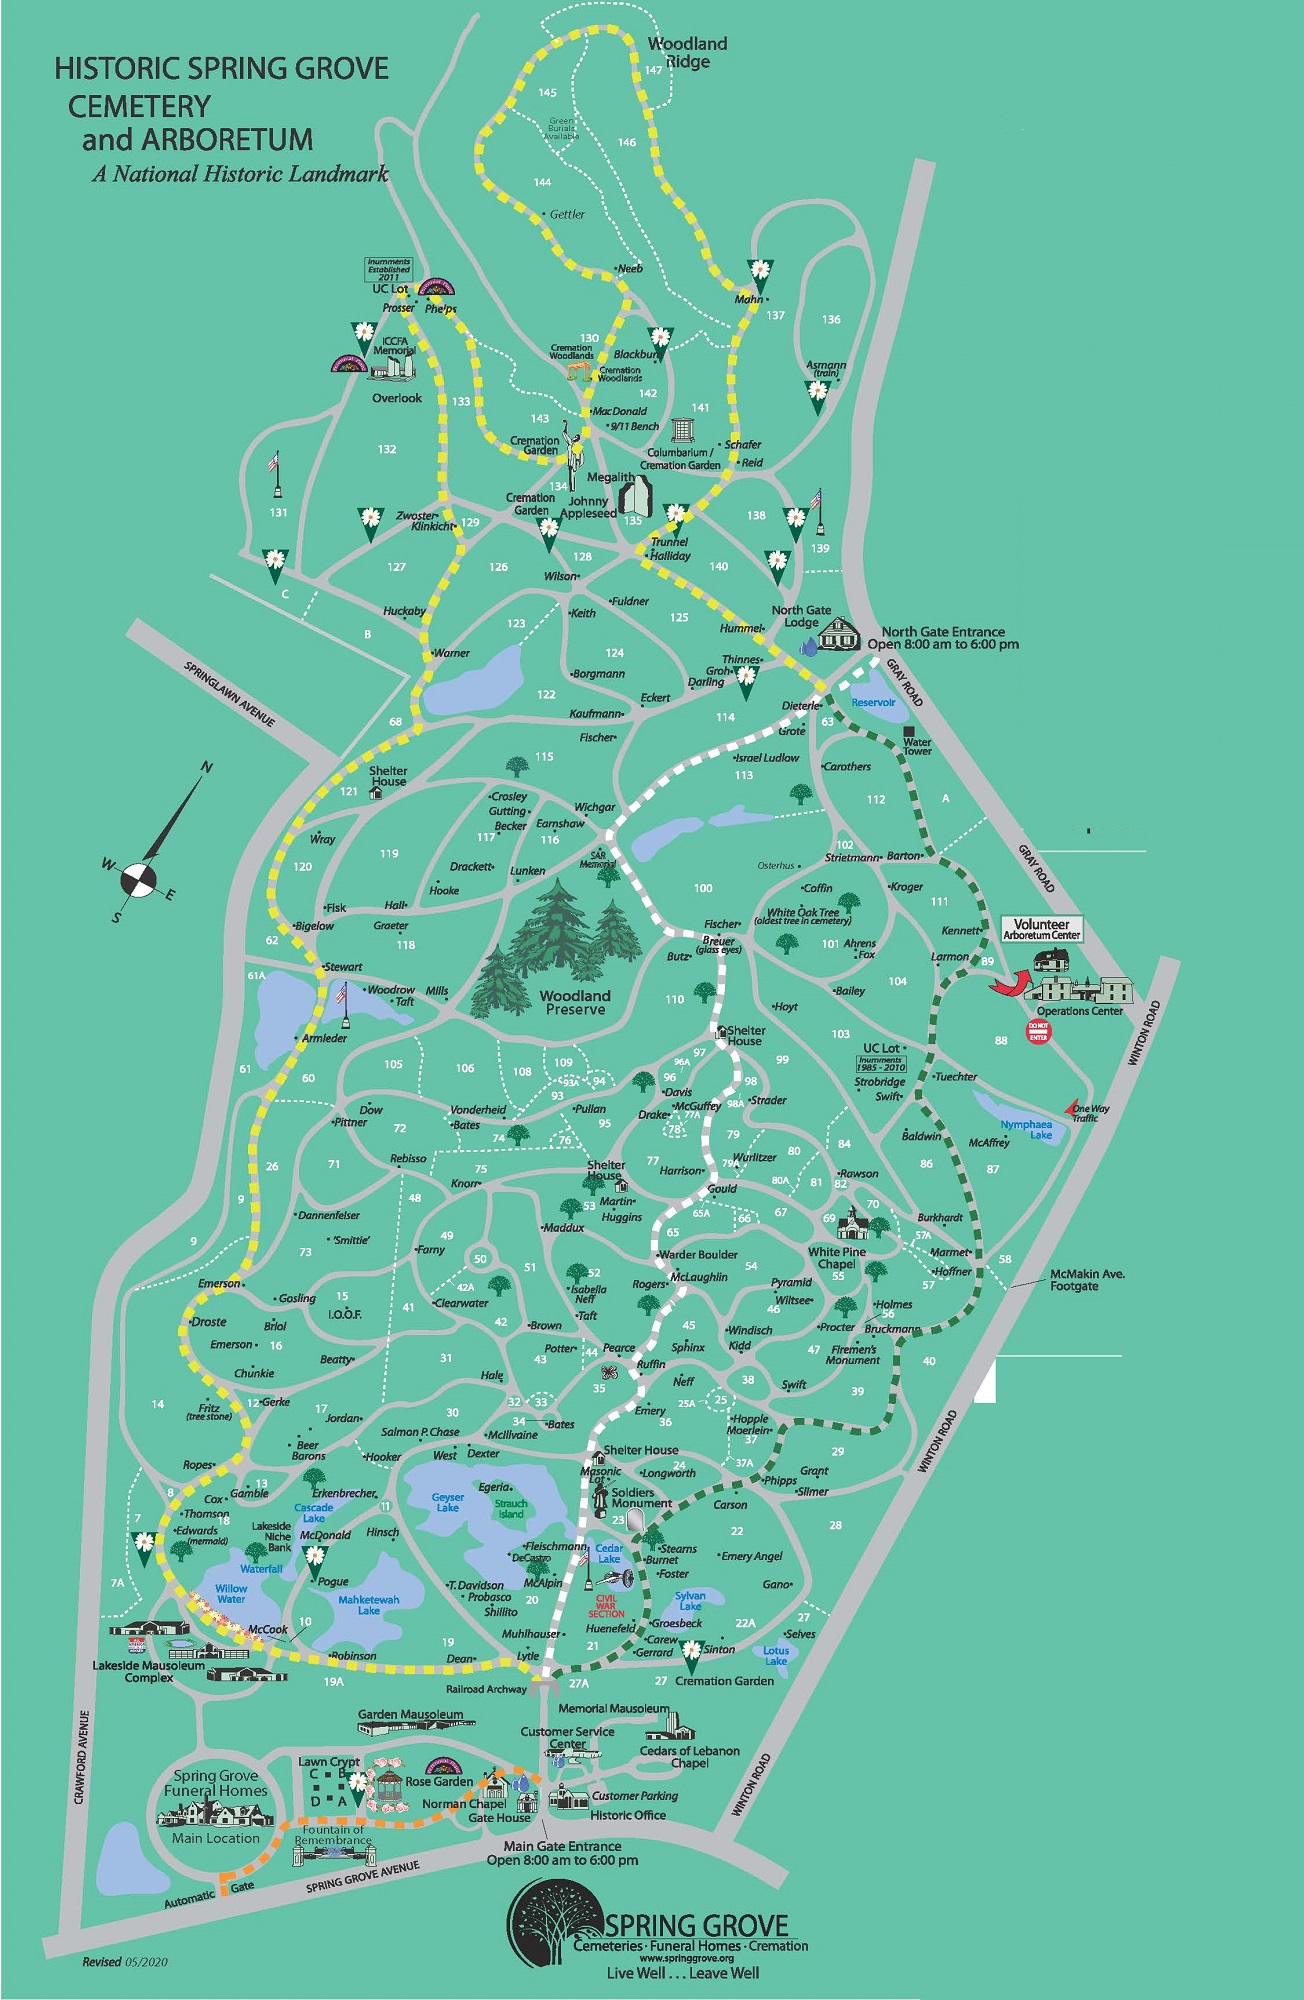 Cemetery map of Spring Grove Cemetery in Cincinnati Ohio